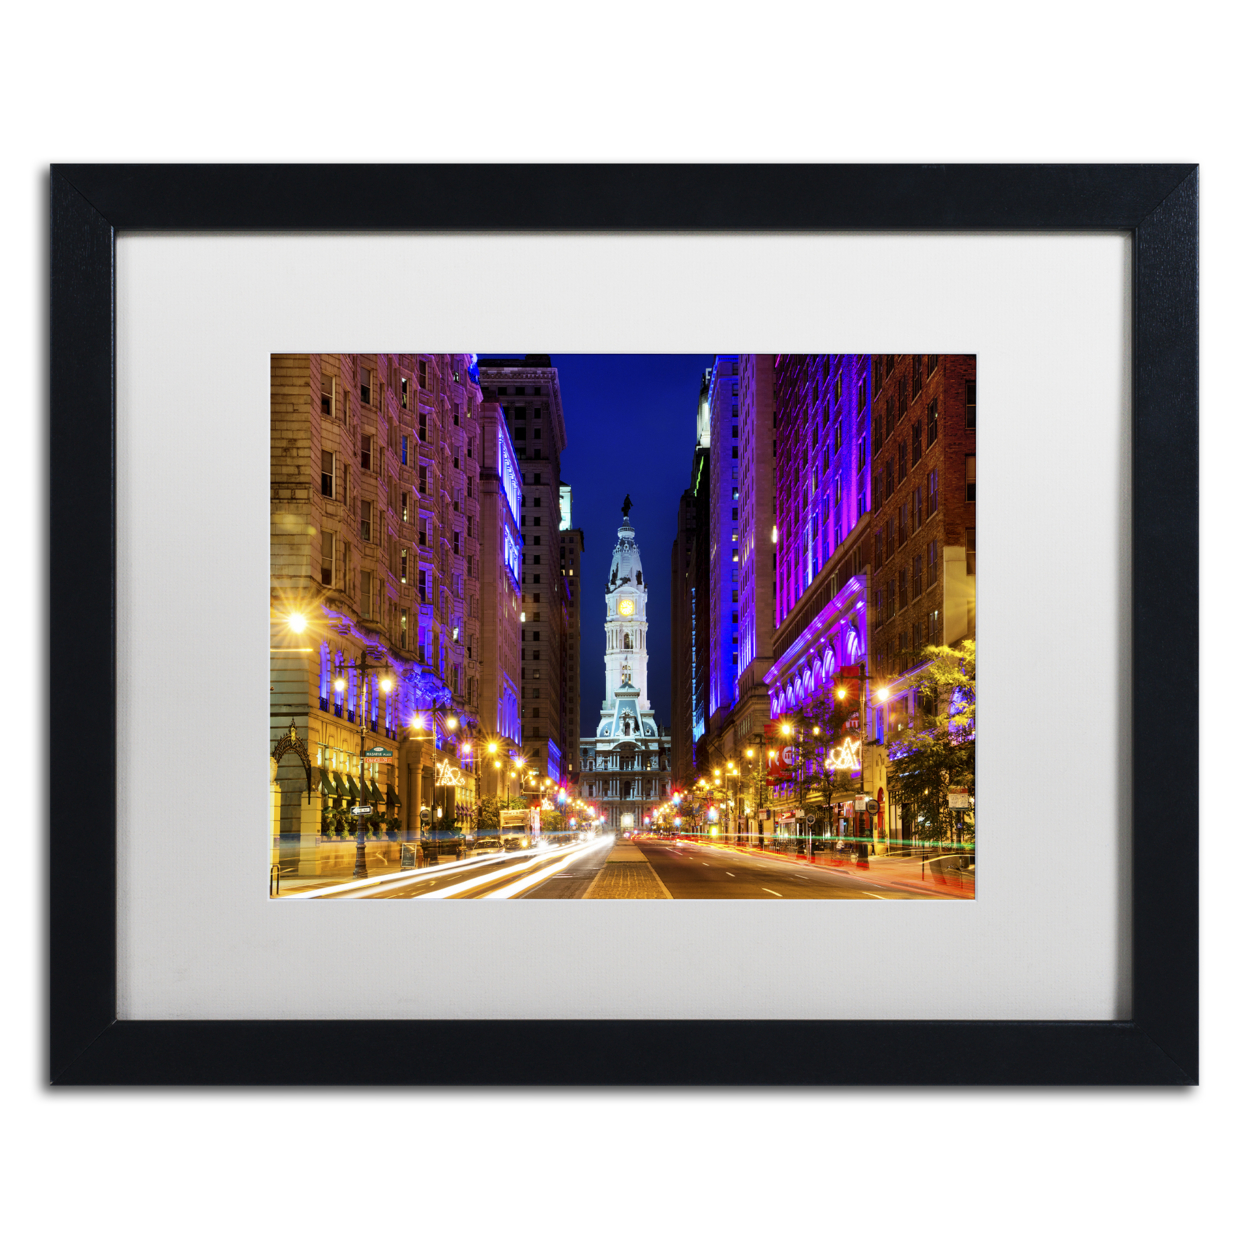 Philippe Hugonnard 'City Hall Philadelphia' Black Wooden Framed Art 18 X 22 Inches